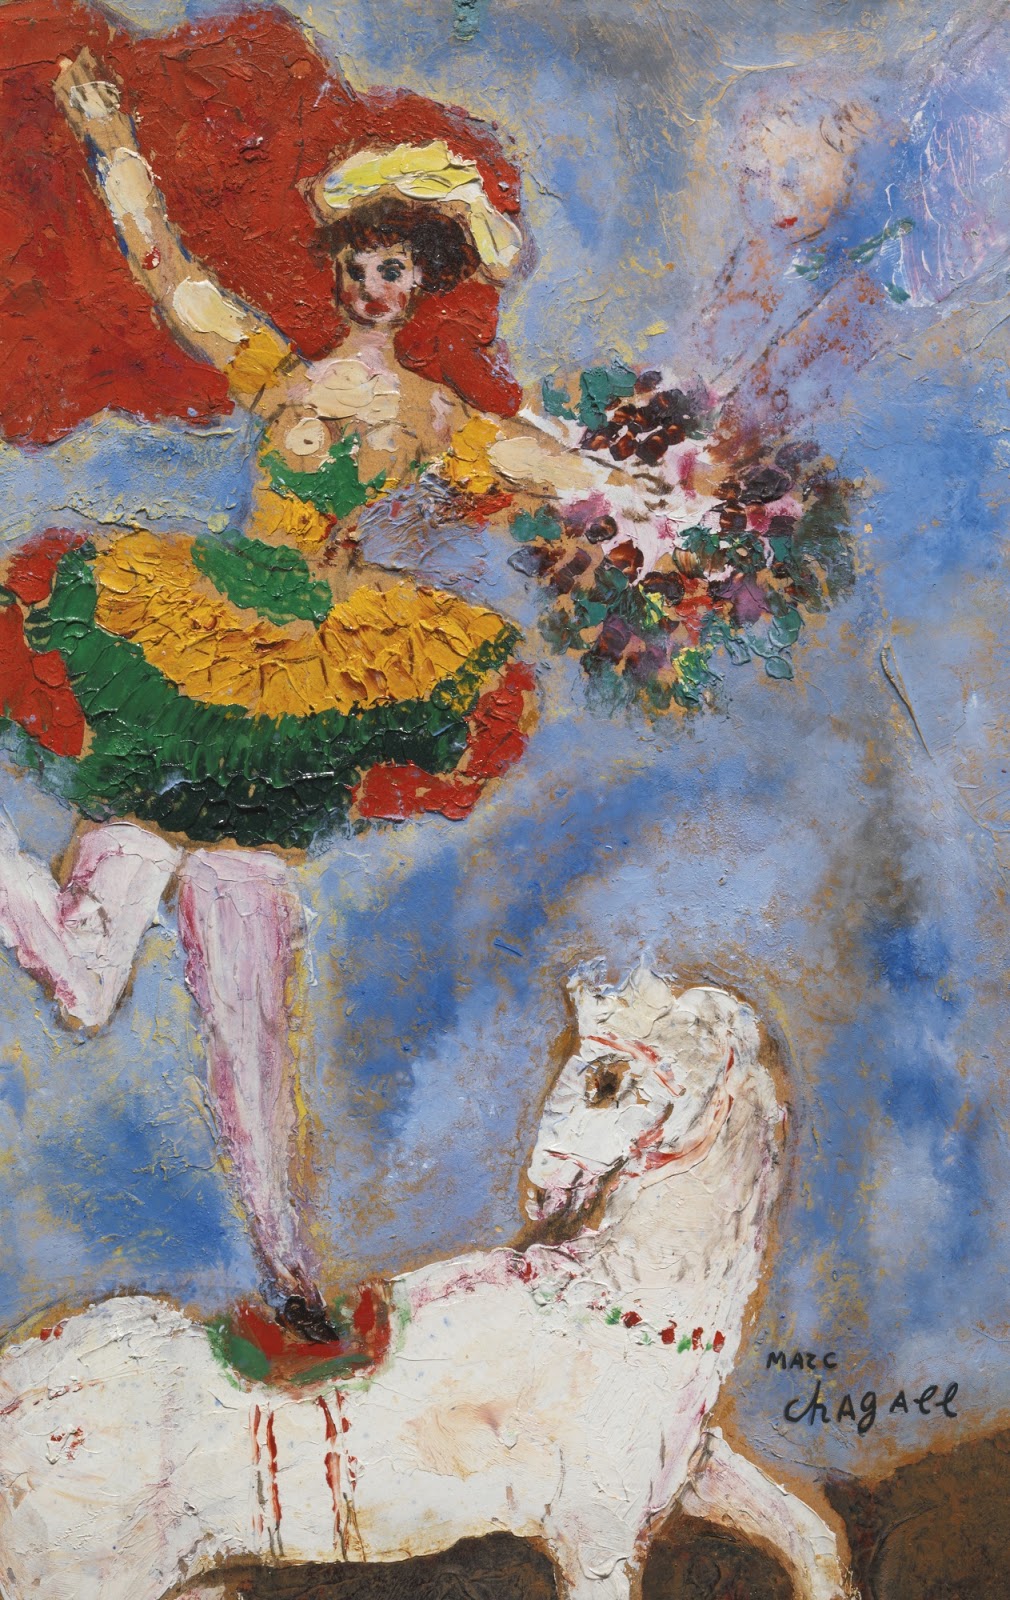 Marc+Chagall-1887-1985 (411).jpg